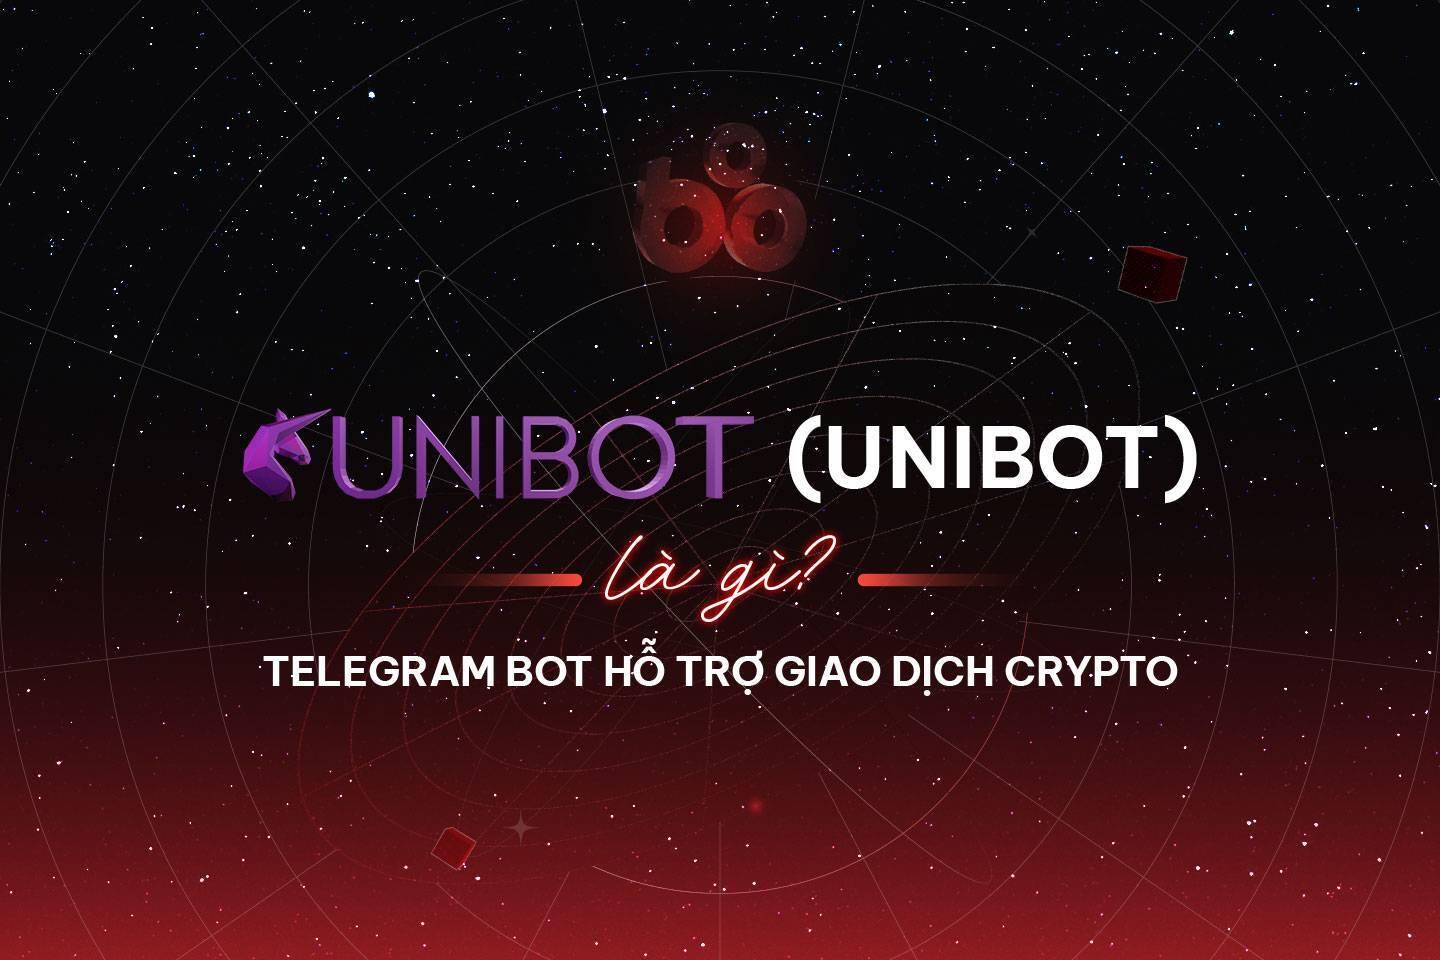 unibot-unibot-la-gi-telegram-bot-ho-tro-giao-dich-crypto